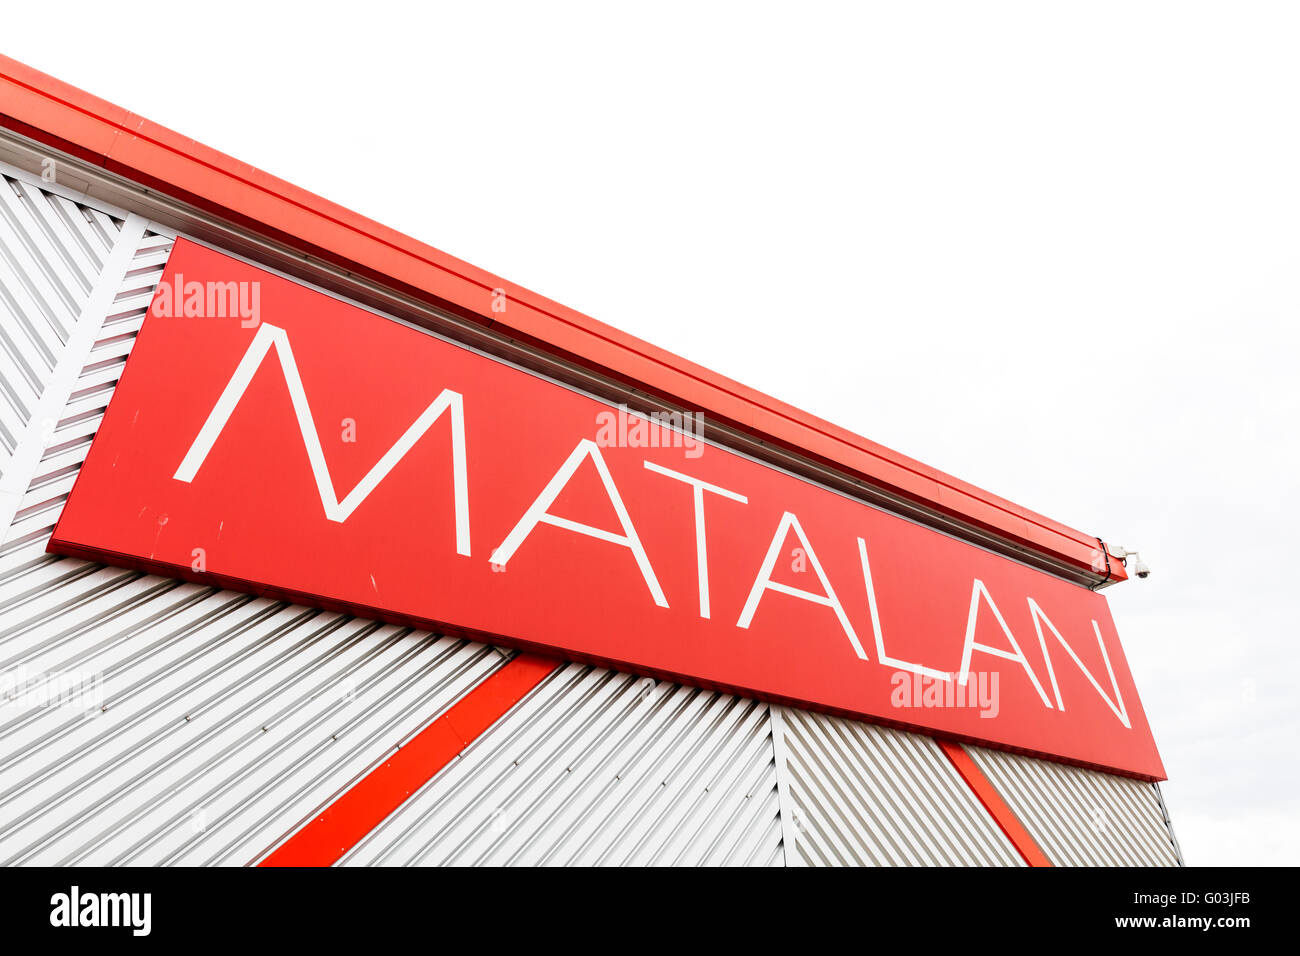 Matalan clothing retailer shop sign name store exterior logo UK England housewares  retail shops stores shopping company Stock Photo